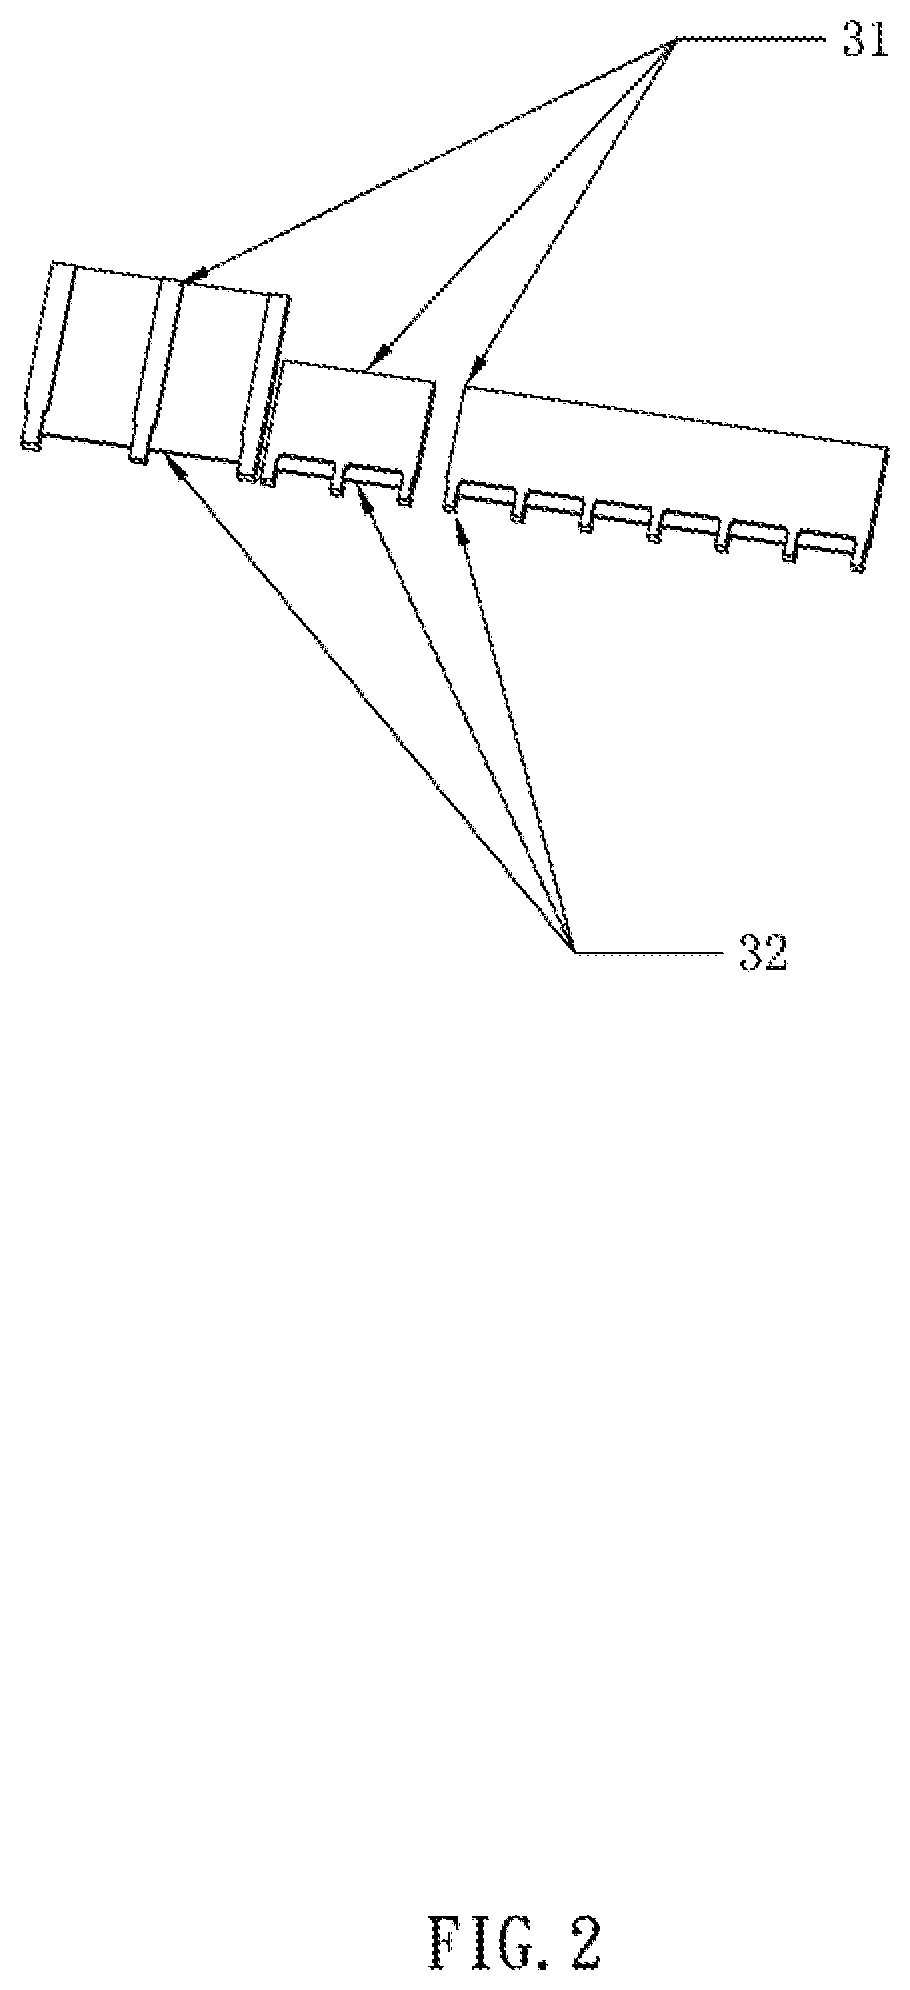 Pcie/sas connector structure